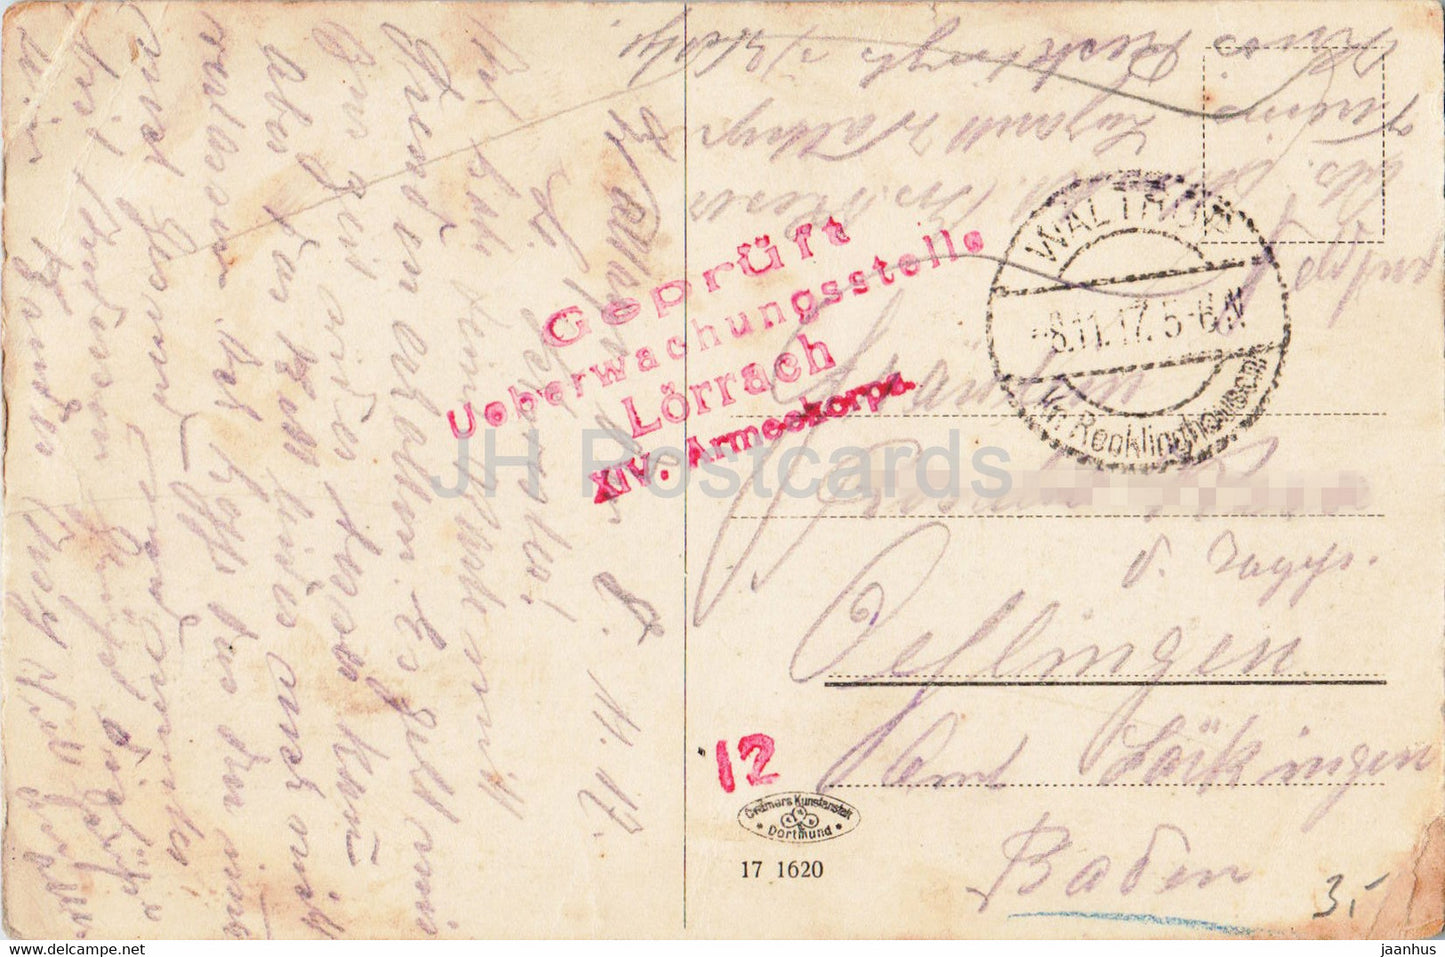 Henrichenburg - Neue Schleuse - Feldpost - XIV Armeekorps - 1917 - old postcard - Germany - used